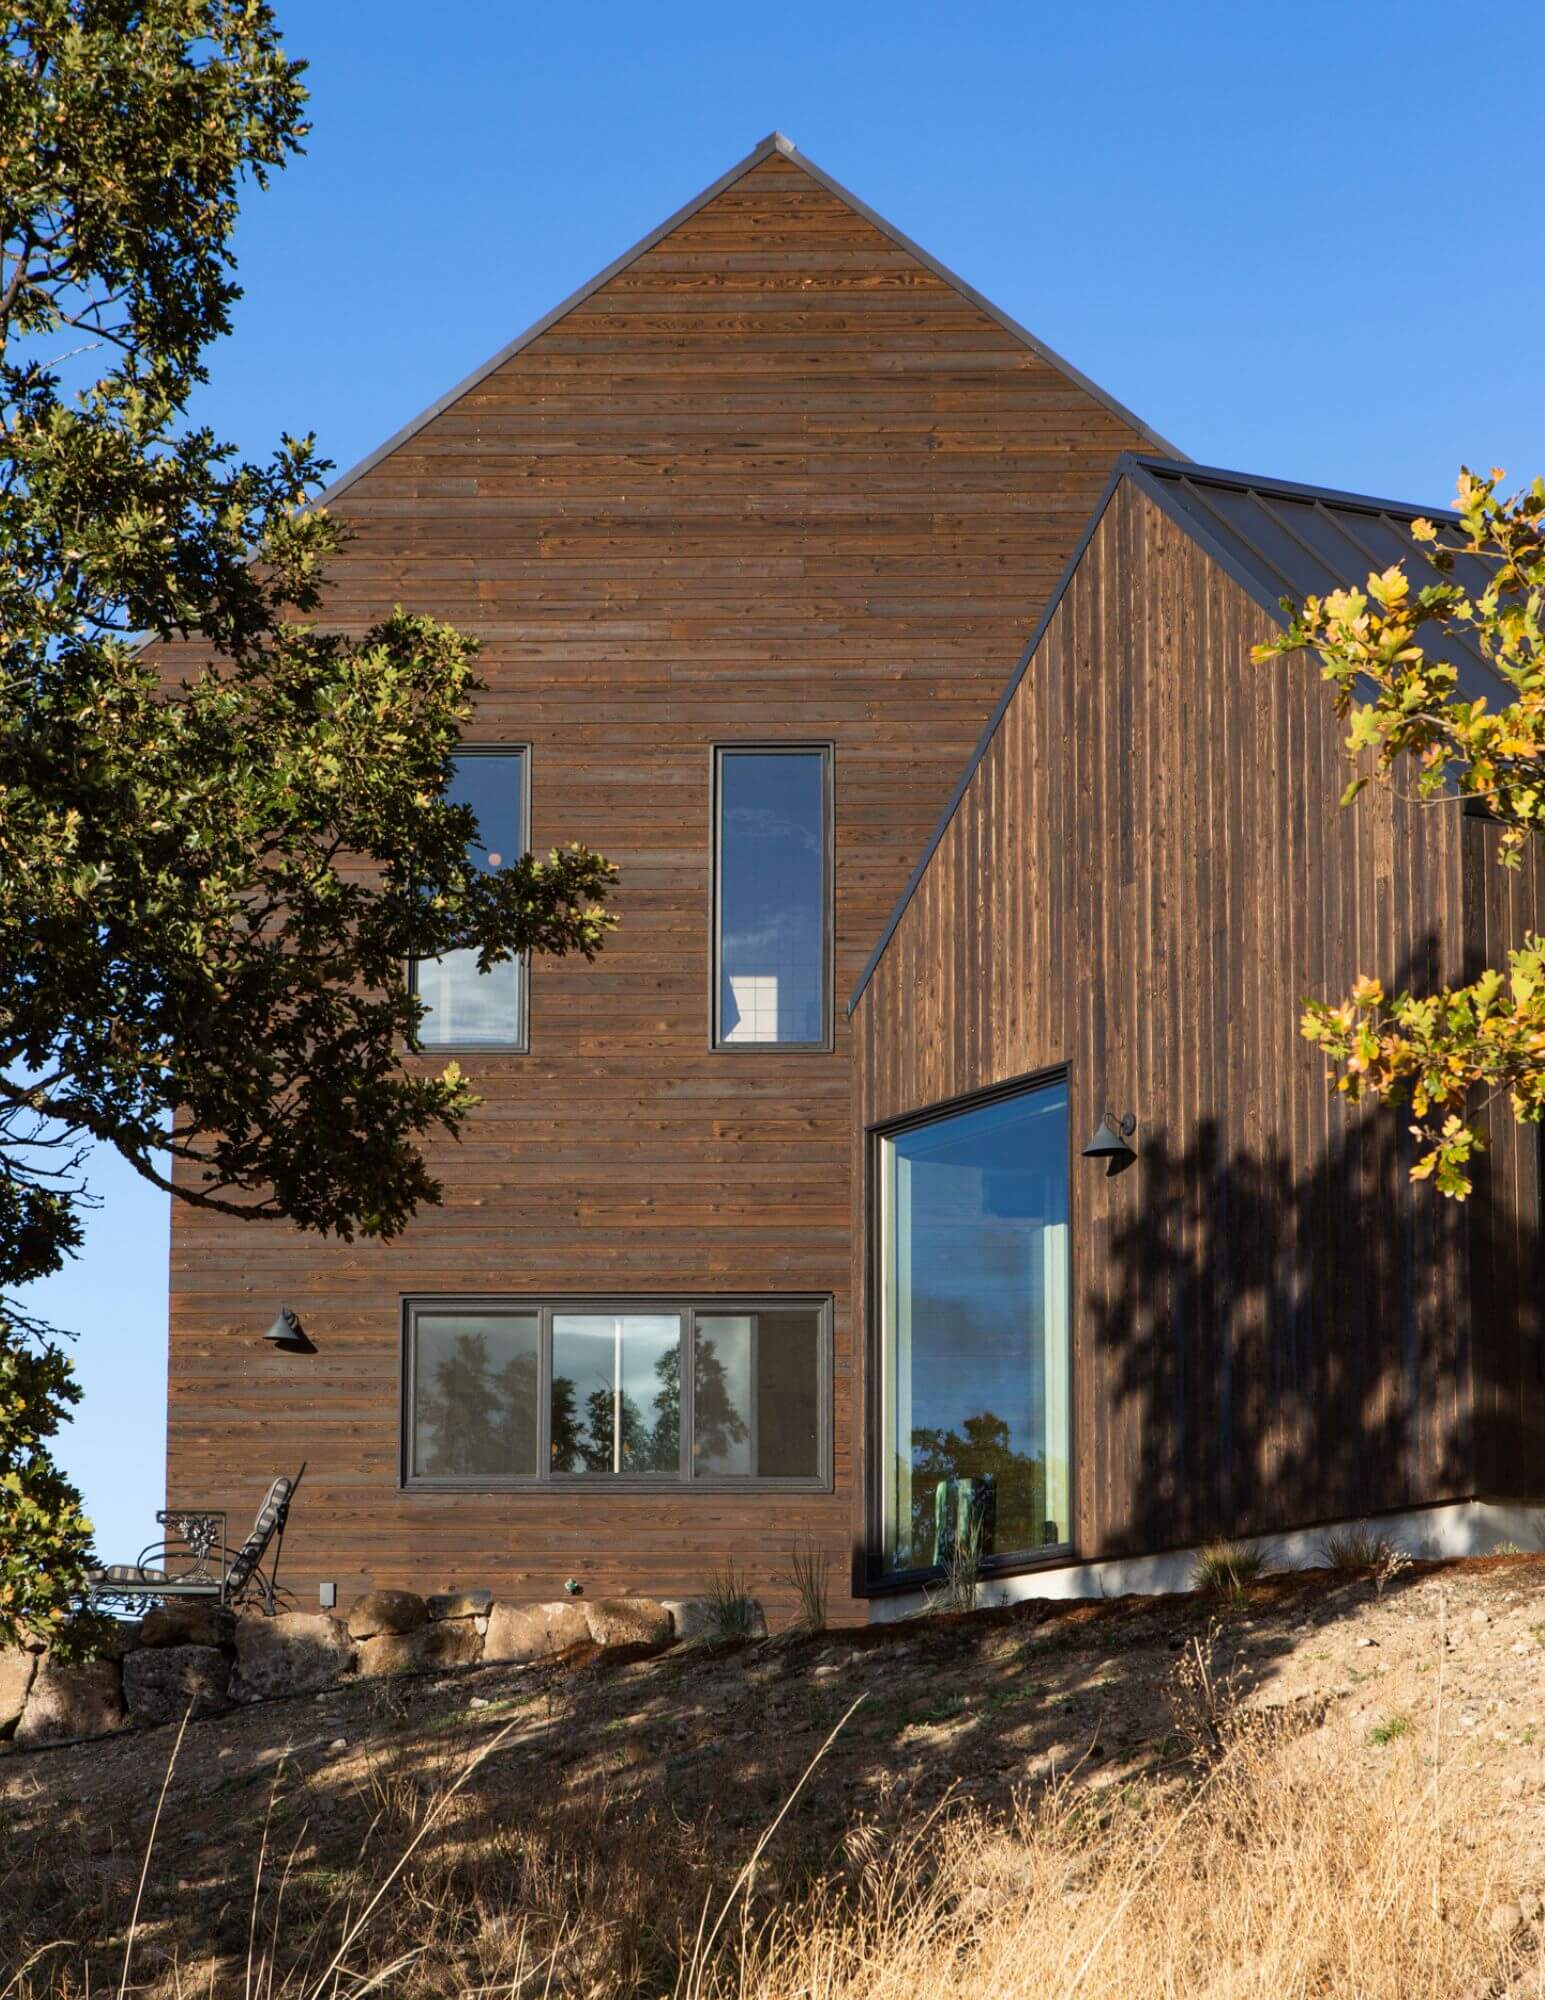 A wood-clad house on the ledge